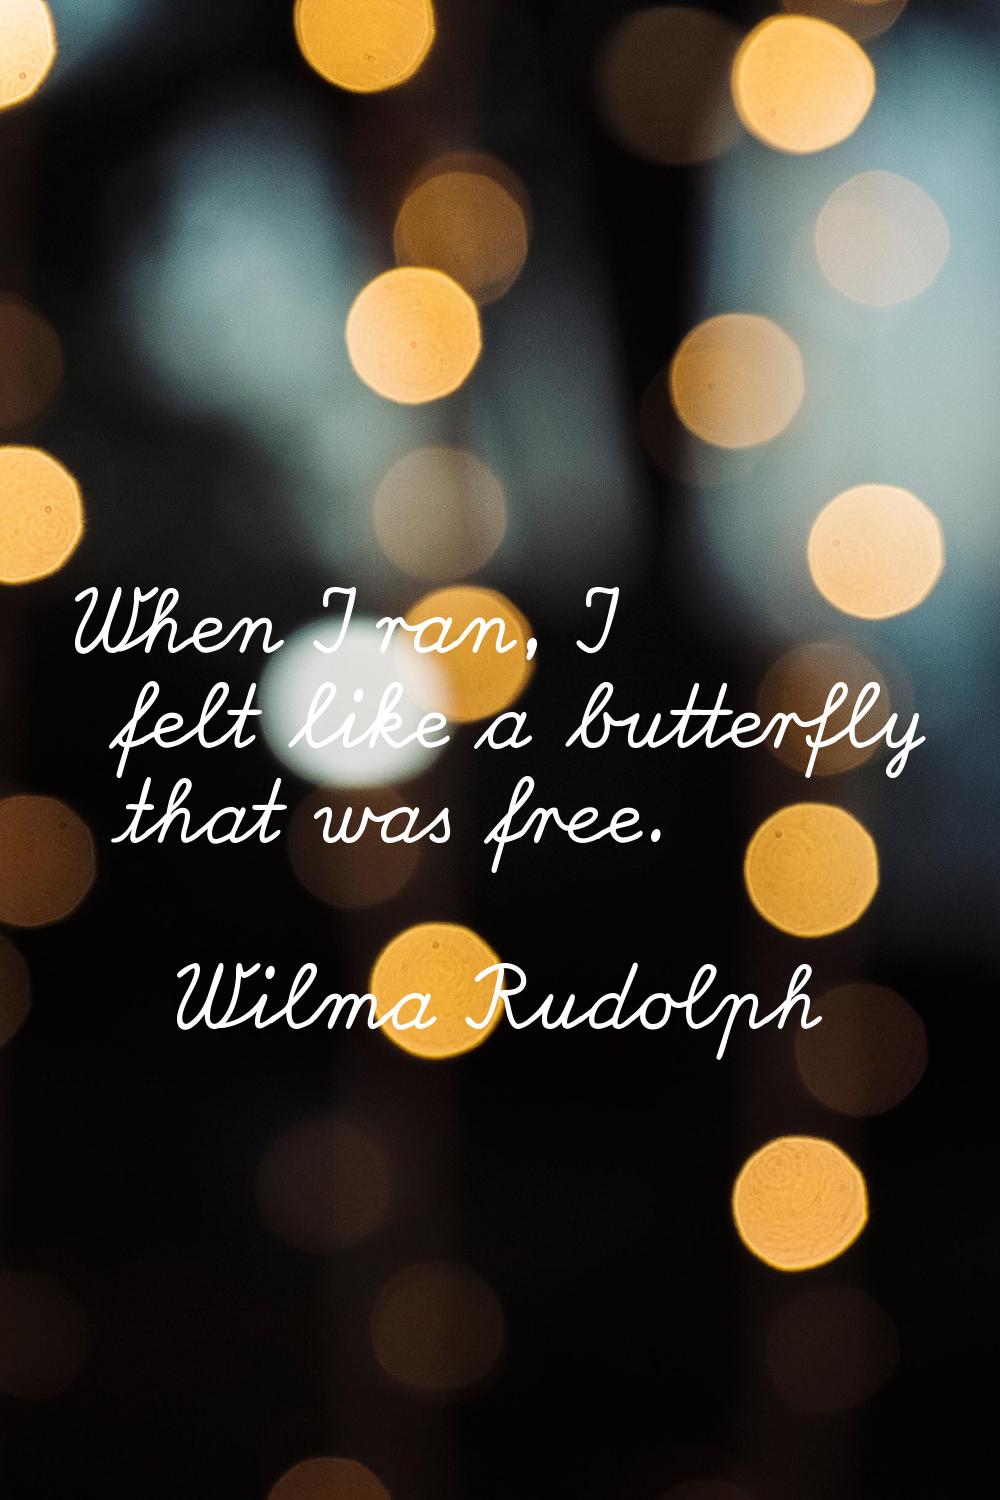 When I ran, I felt like a butterfly that was free.